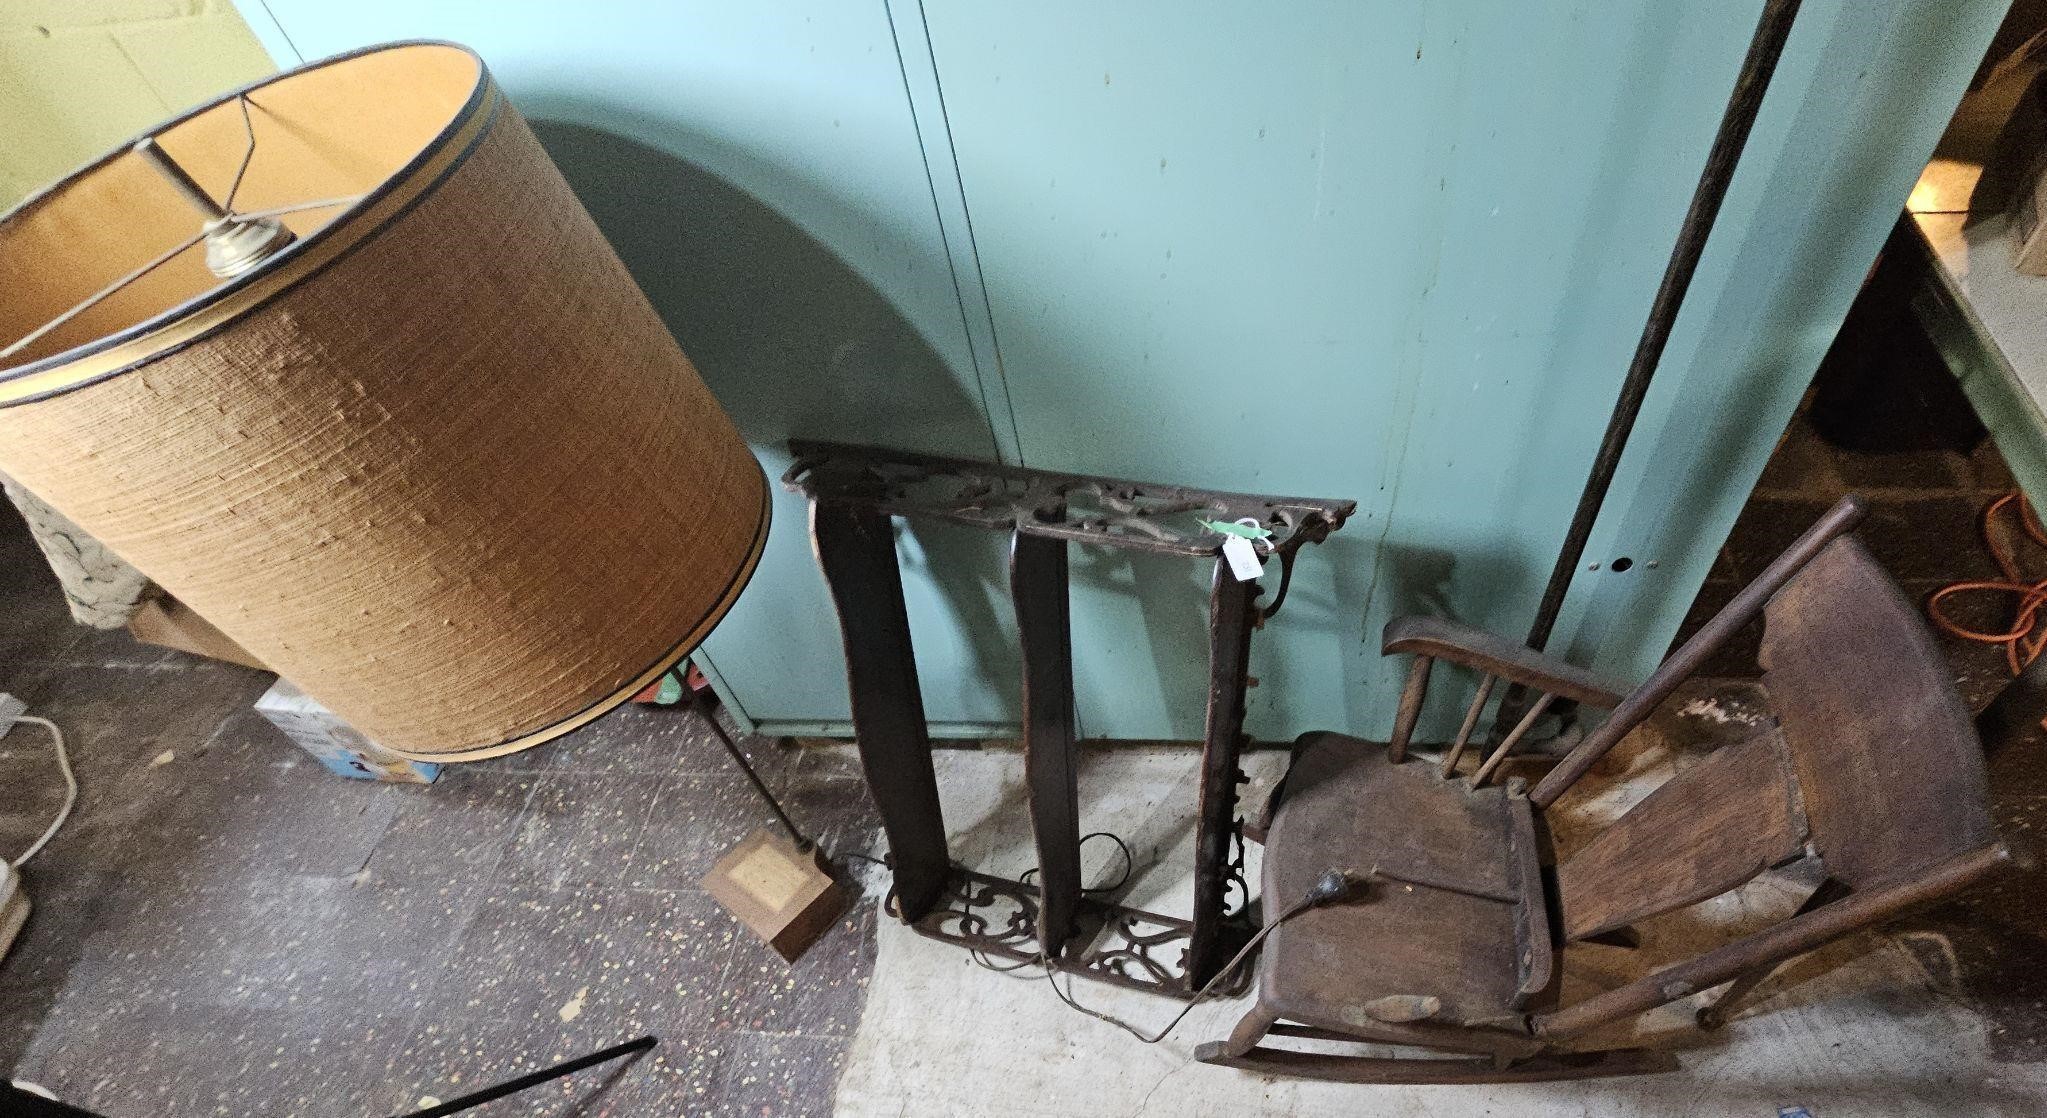 Lamp, Childs Rocker, Shelf All need repair